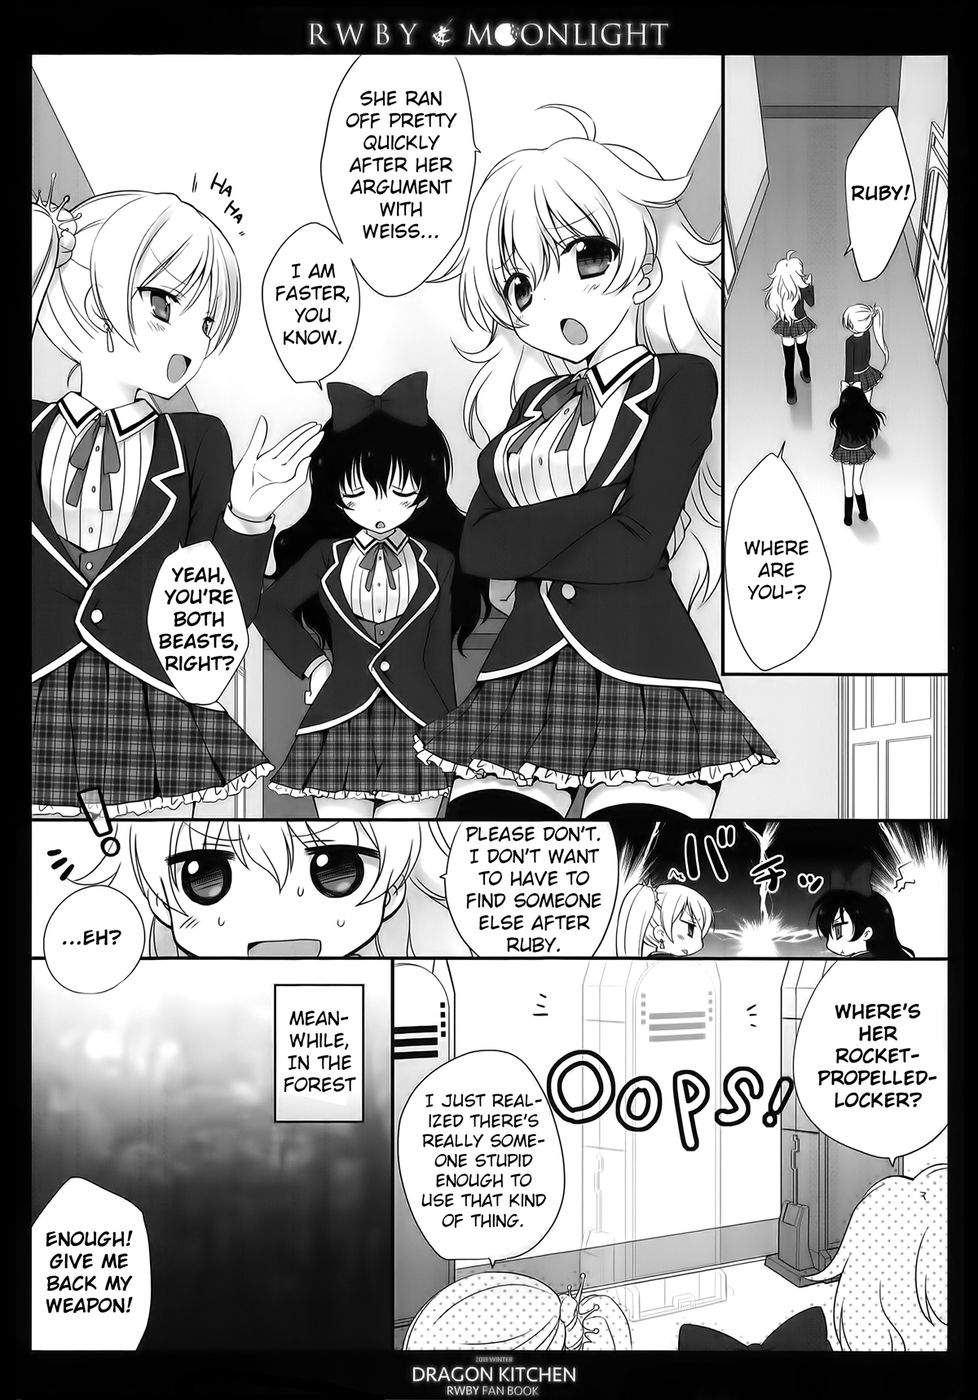 Hentai Manga Comic-RWBY MOONLIGHT-Read-4